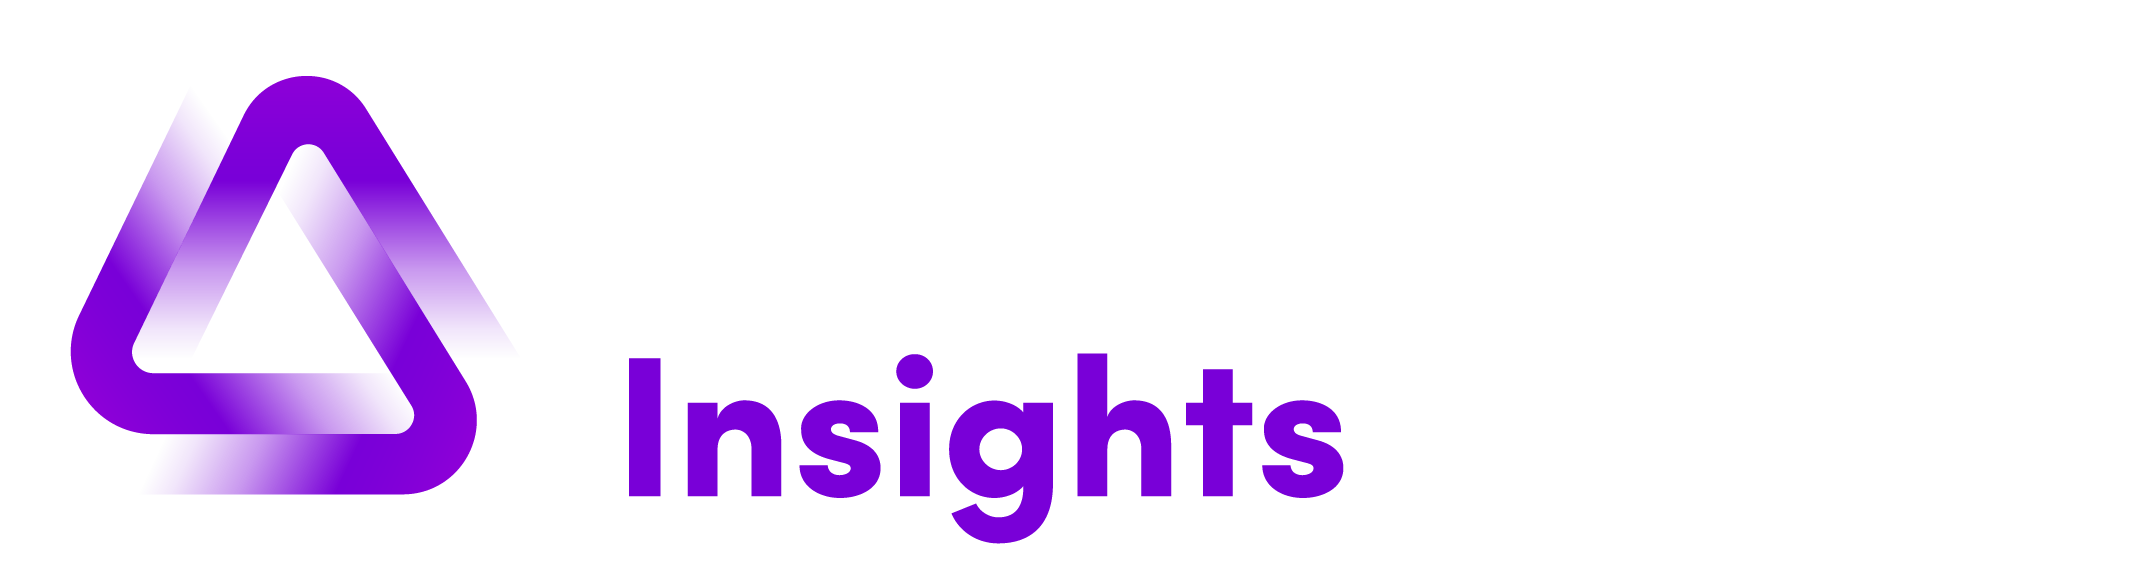 MoreThanDigital Insights Logo Full on Black